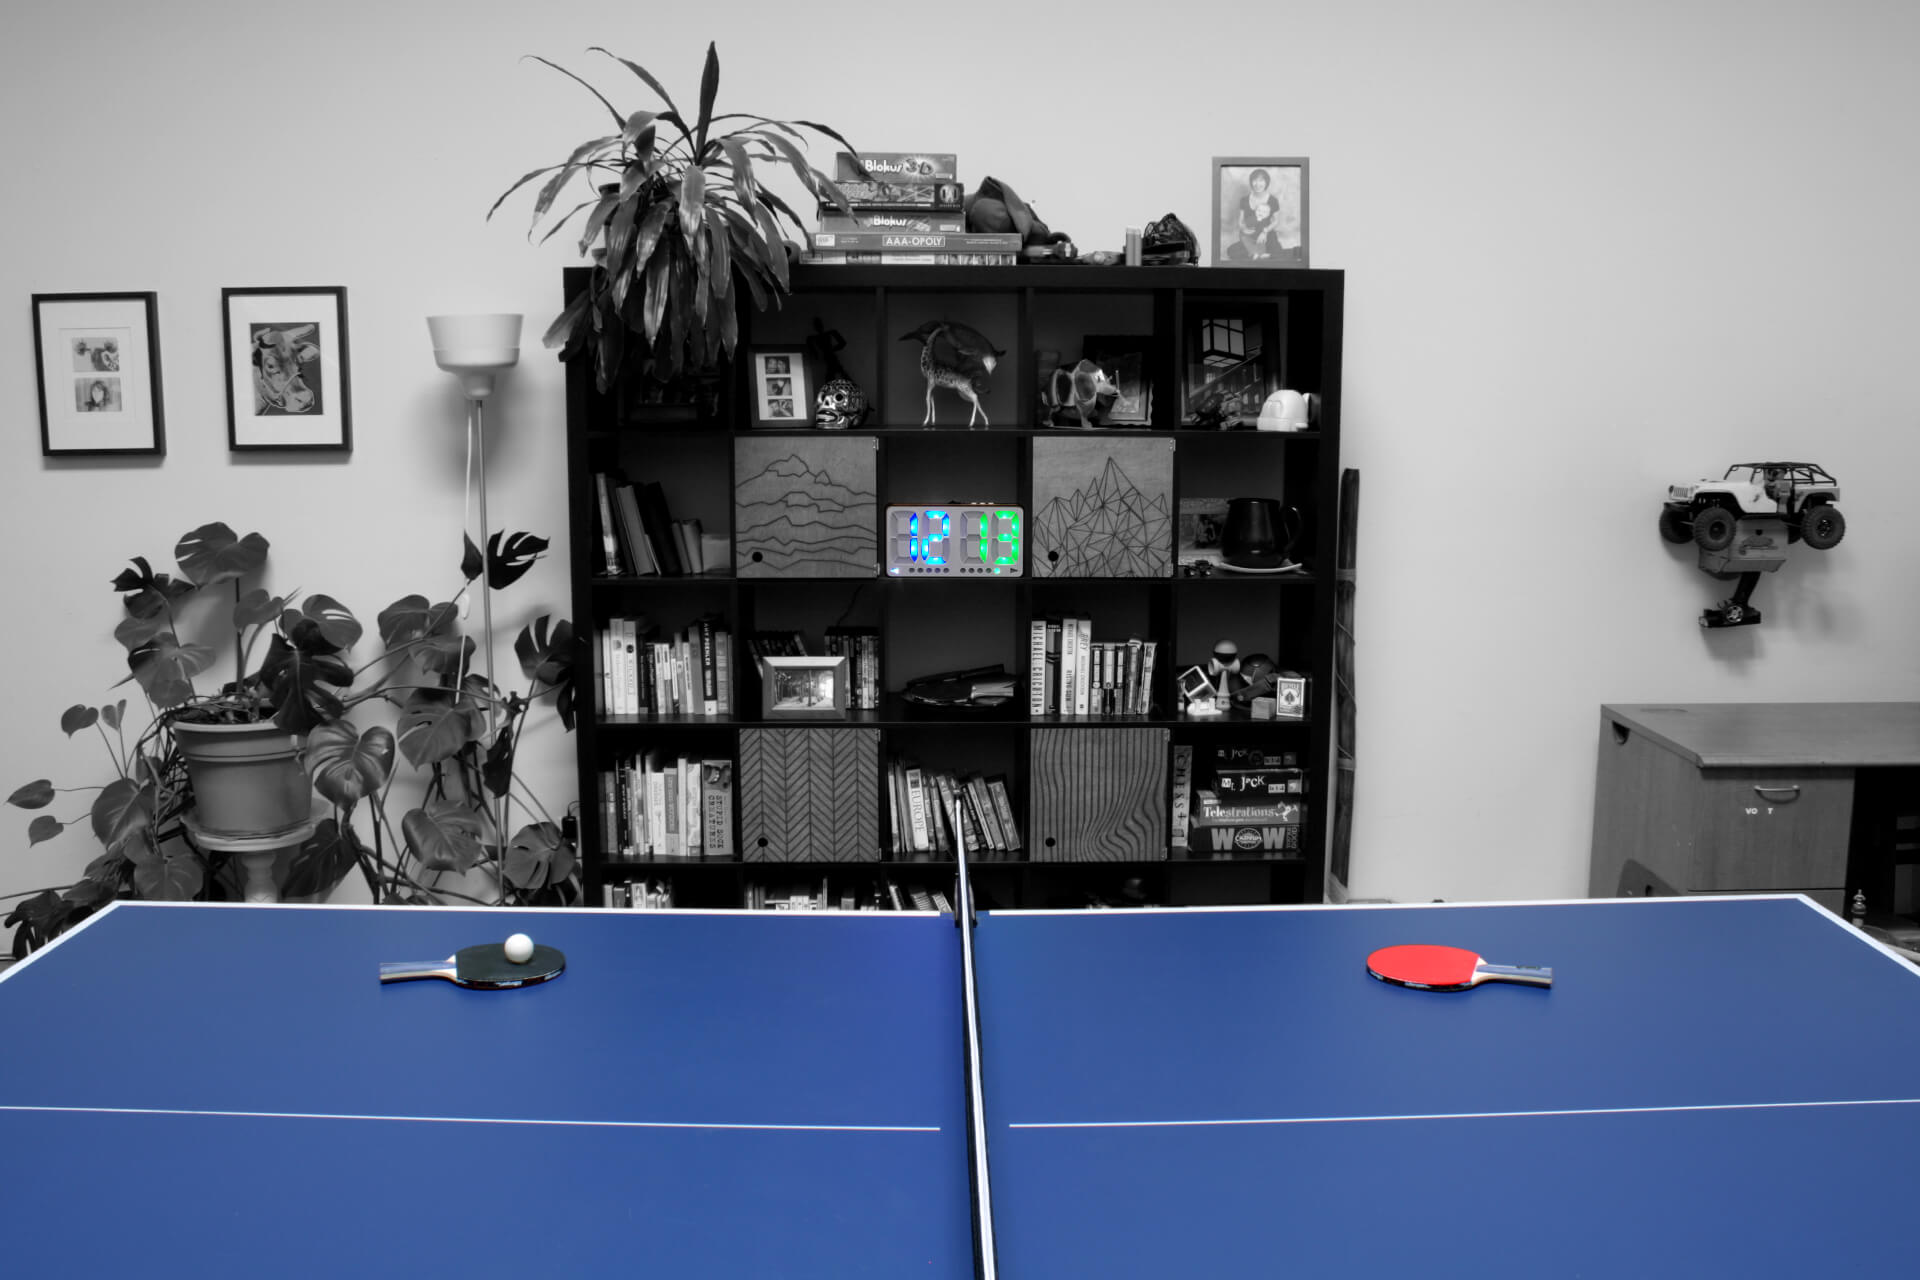 An in-use shot of the digital table tennis scoreboard